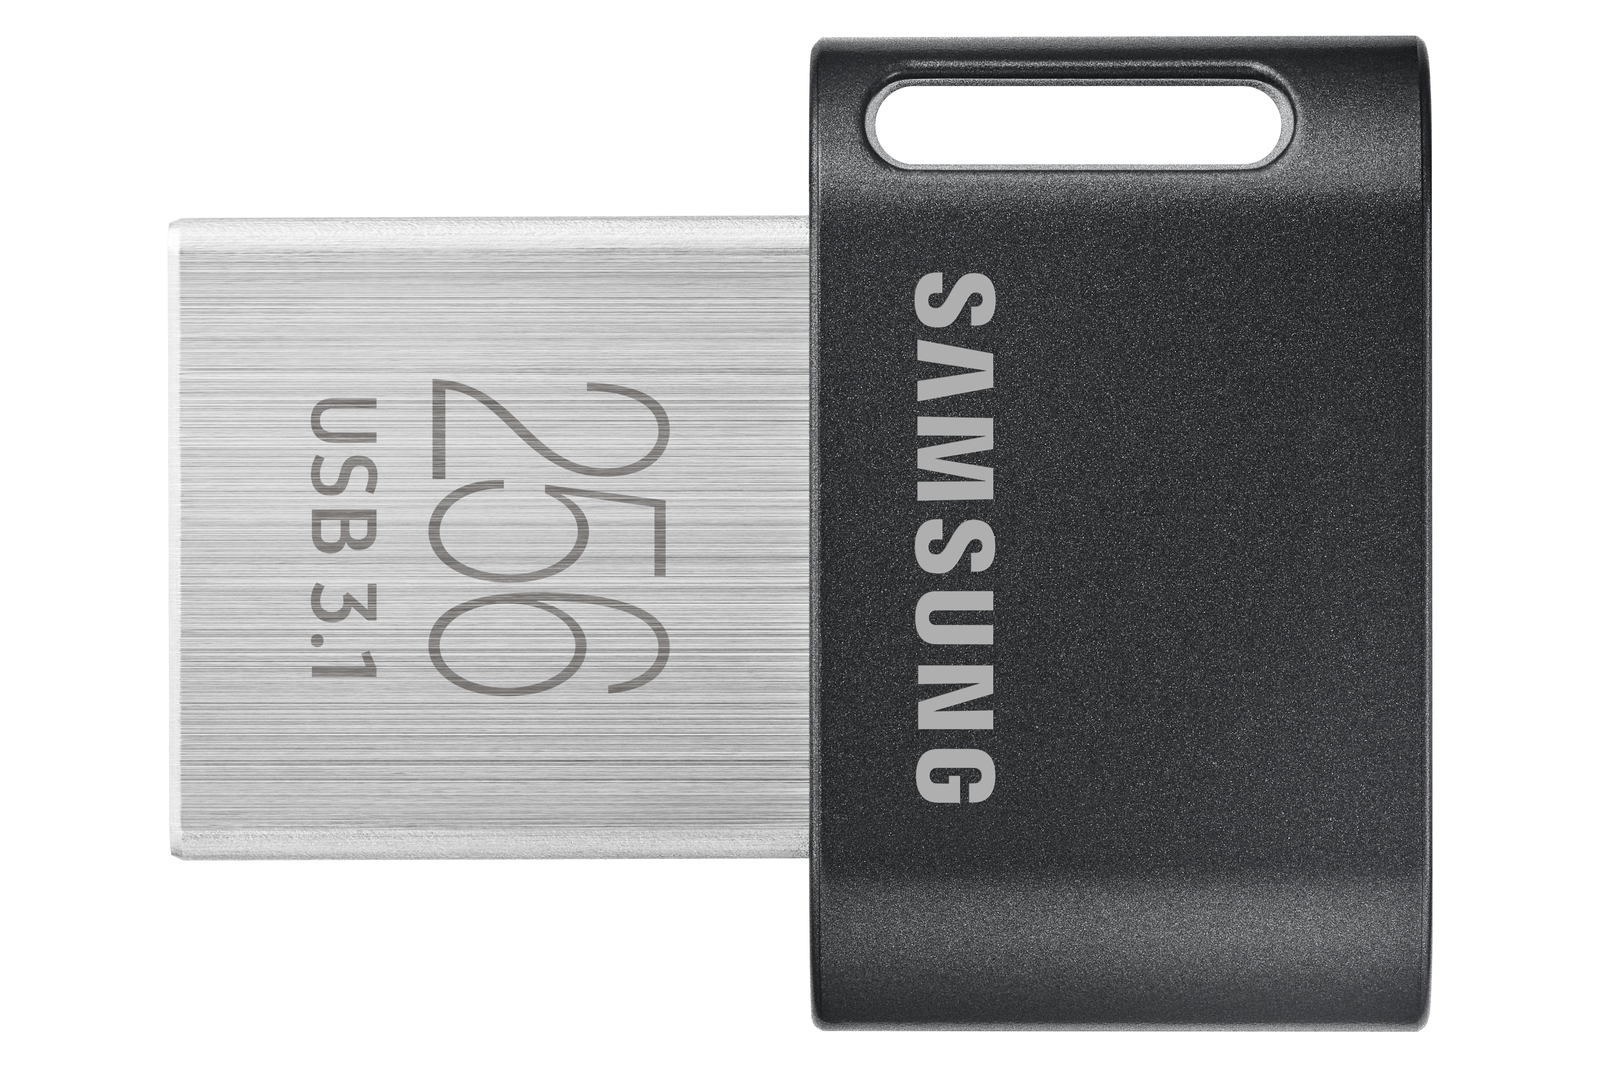 Pendrive 128GB,Getue Memoria USB 2.0 Pen Drive Memoria Flash USB Stick Flash Drive 128GB, C-Plata 